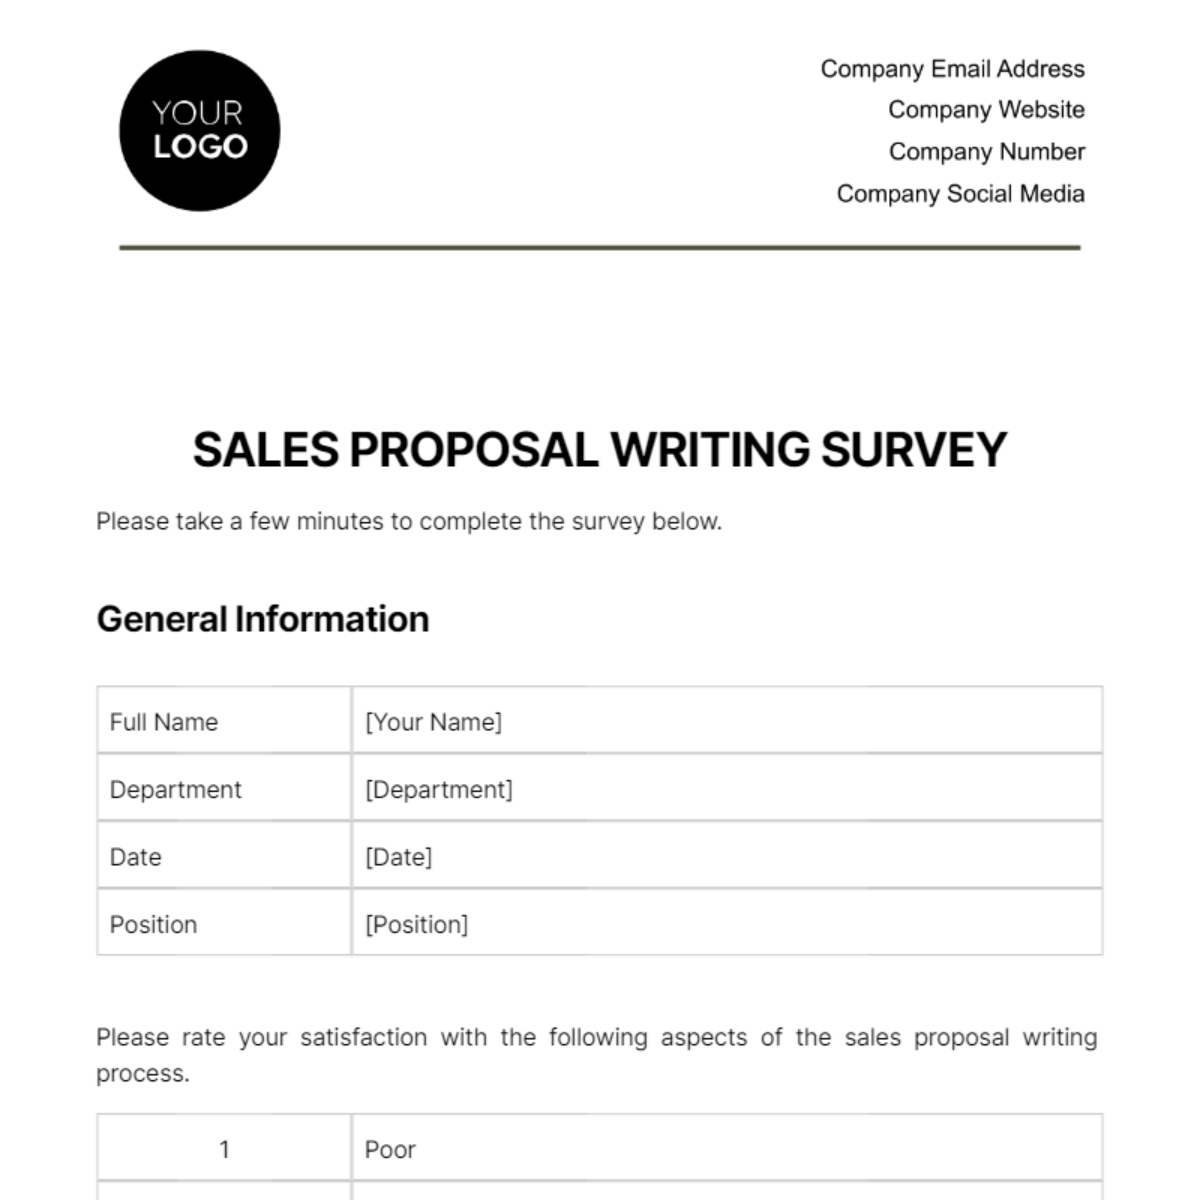 Free Sales Proposal Writing Survey Template